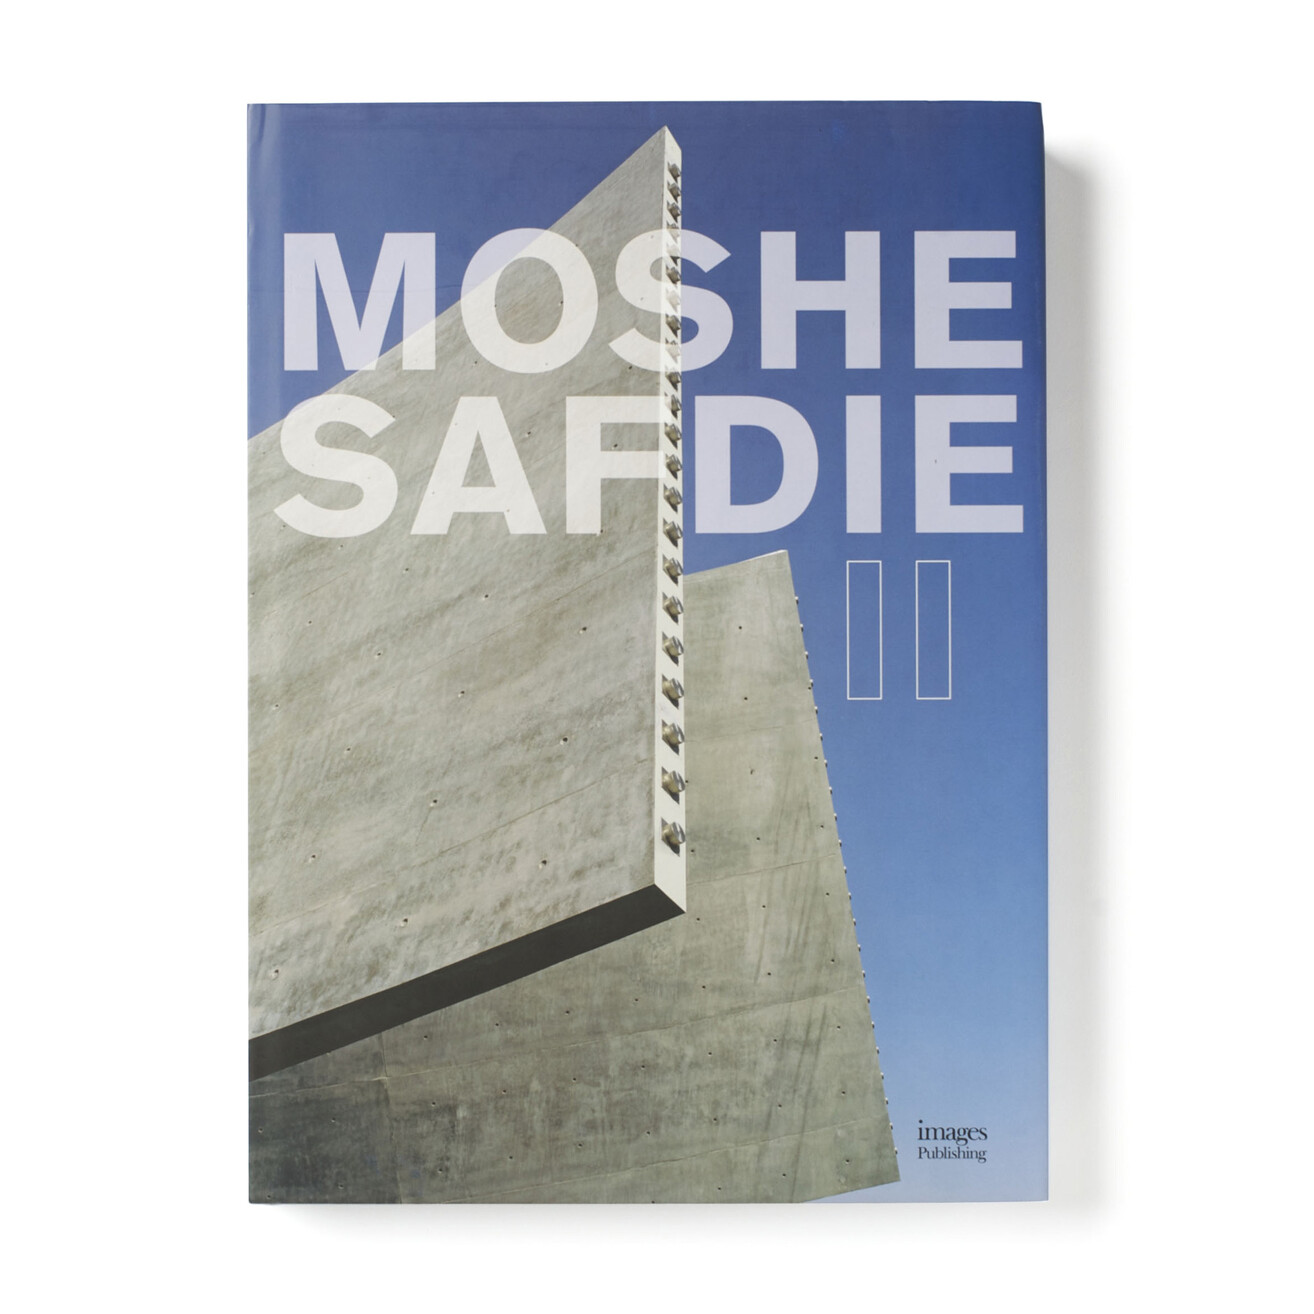 Moshe Safdie book 2 cover